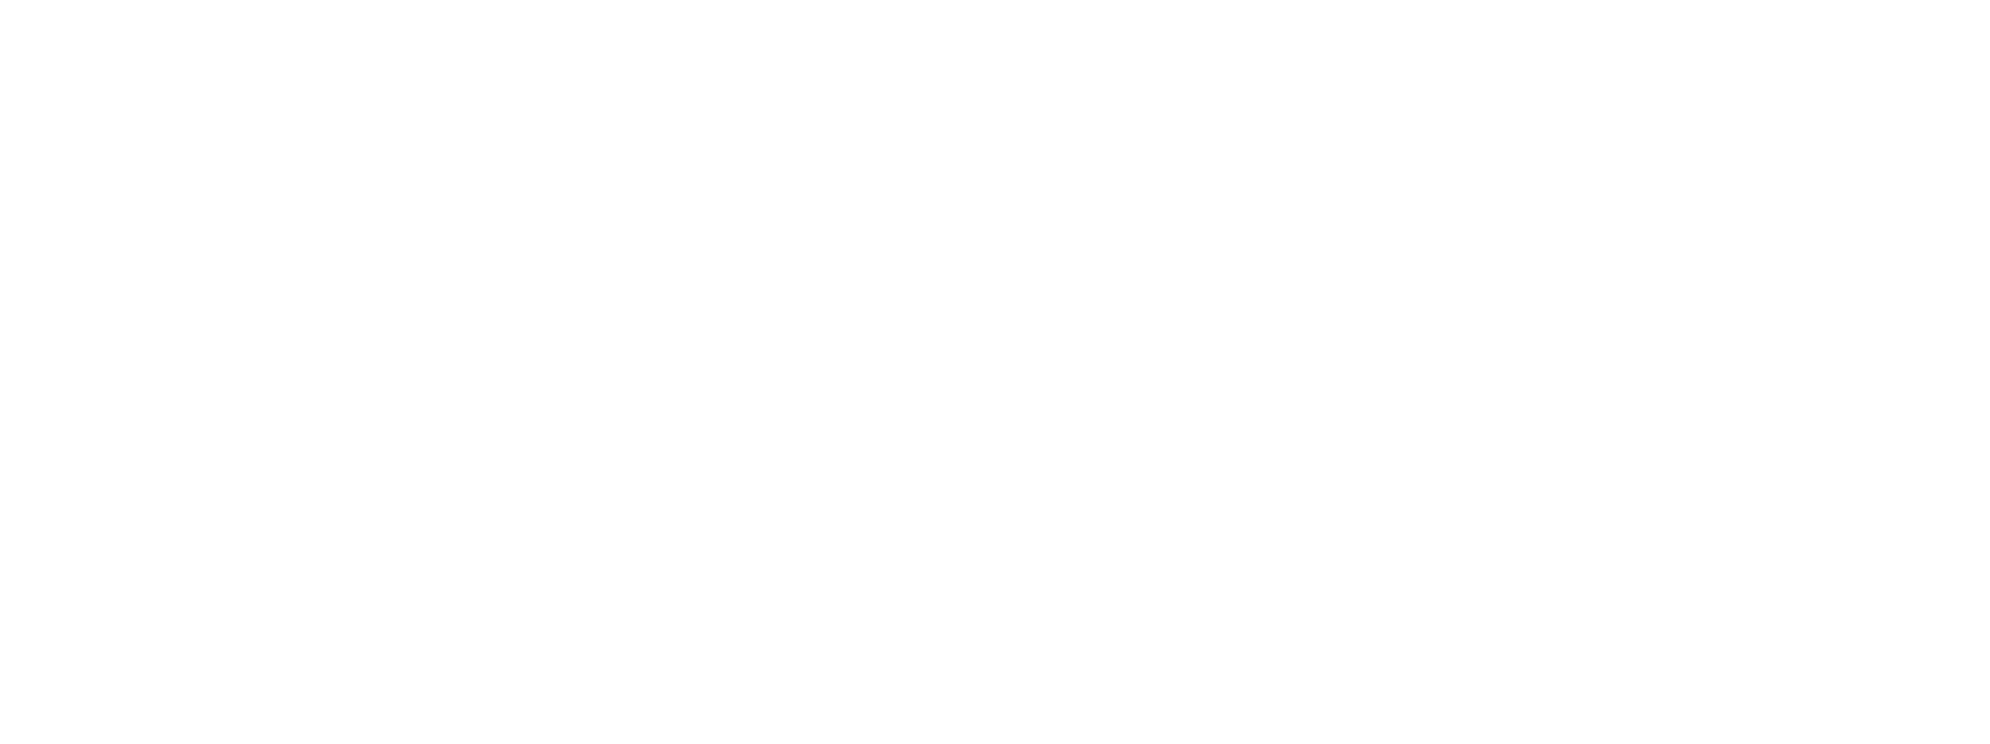 botn de grupo vulnerable, personas con diabetes